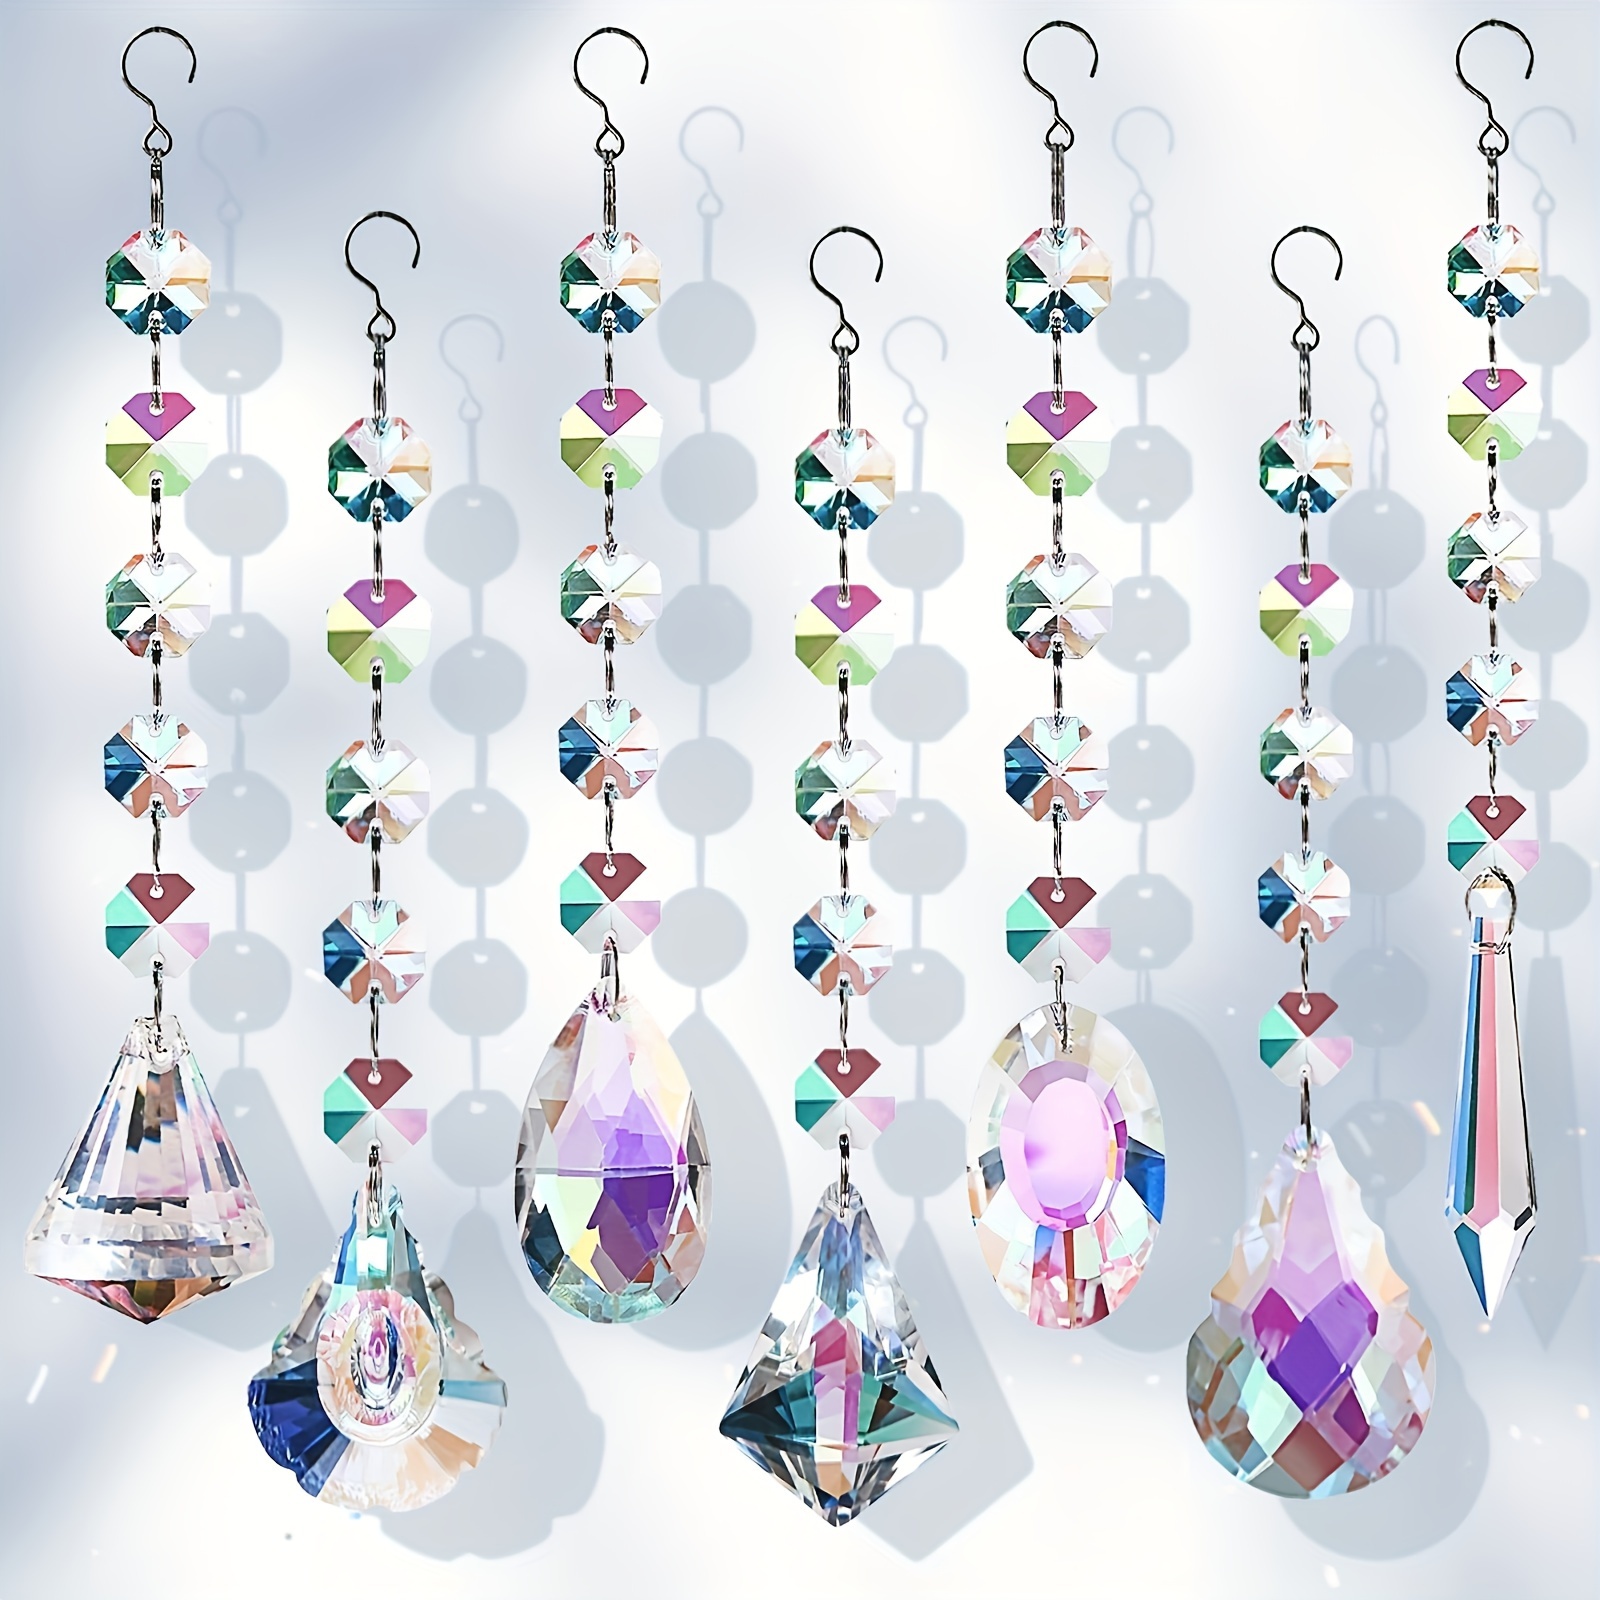 

7 Pieces Sun Catchers Indoor Window Suncatcher Crystals Beads Rainbow Prism Balls Pendant Colorful Light Catcher Hanging Ornaments For Window Chandelier Office Home Garden Decor